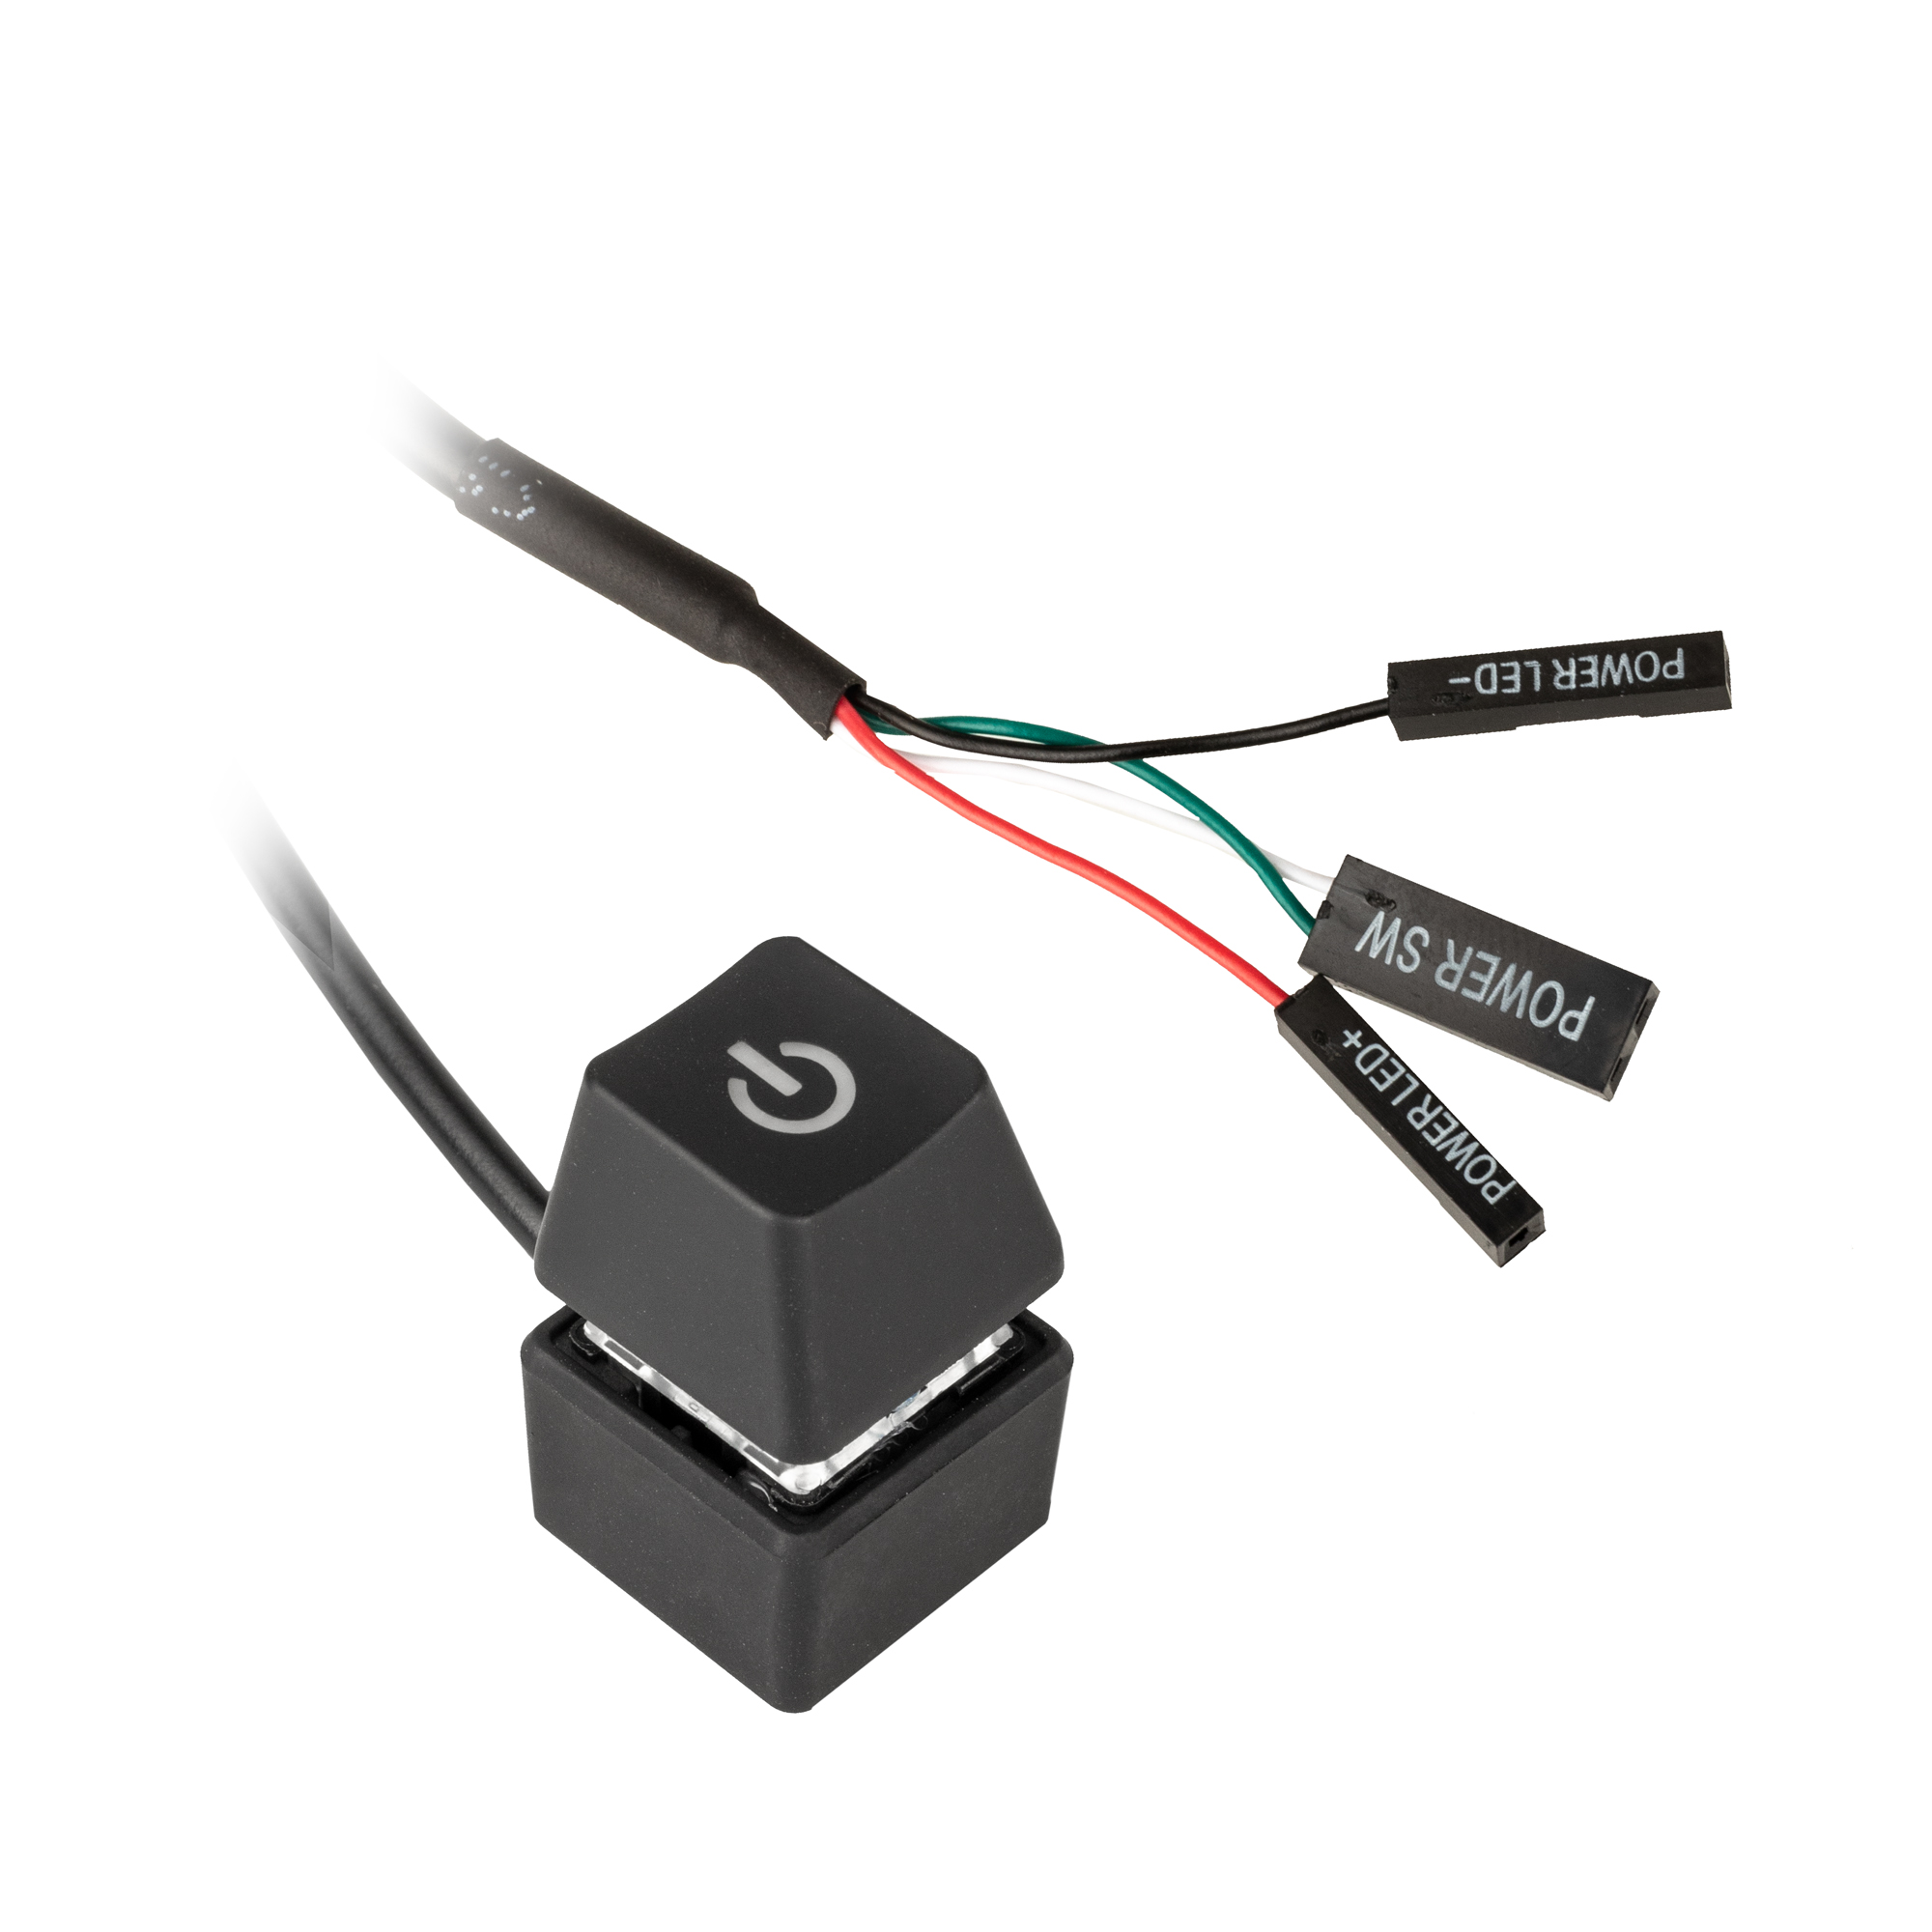 Kolink - Kolink External Power Button with Cable - 1650mm